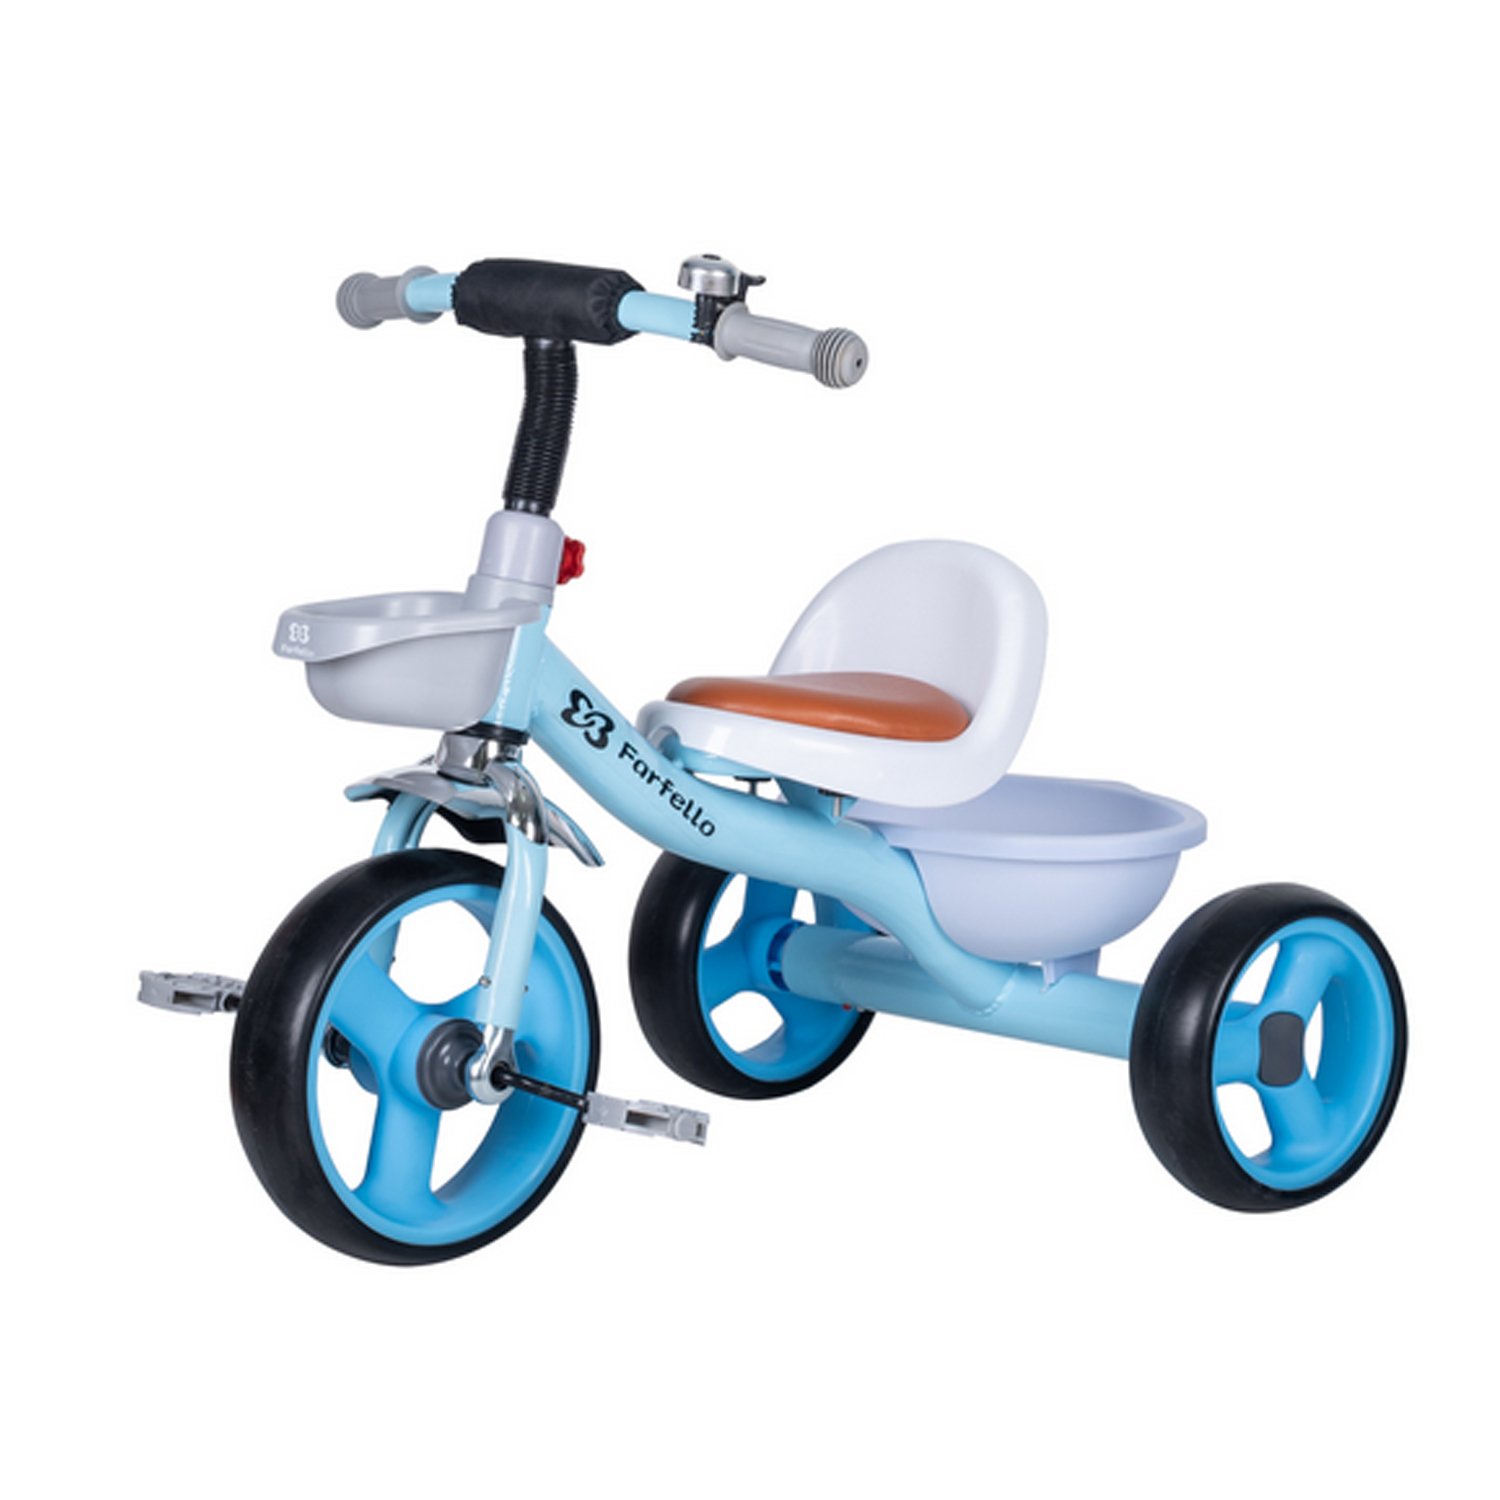 Велосипед Farfello, детский, трехколесный, (2022), синий, YLT-855 велосипед трехколесный farfello ax 25